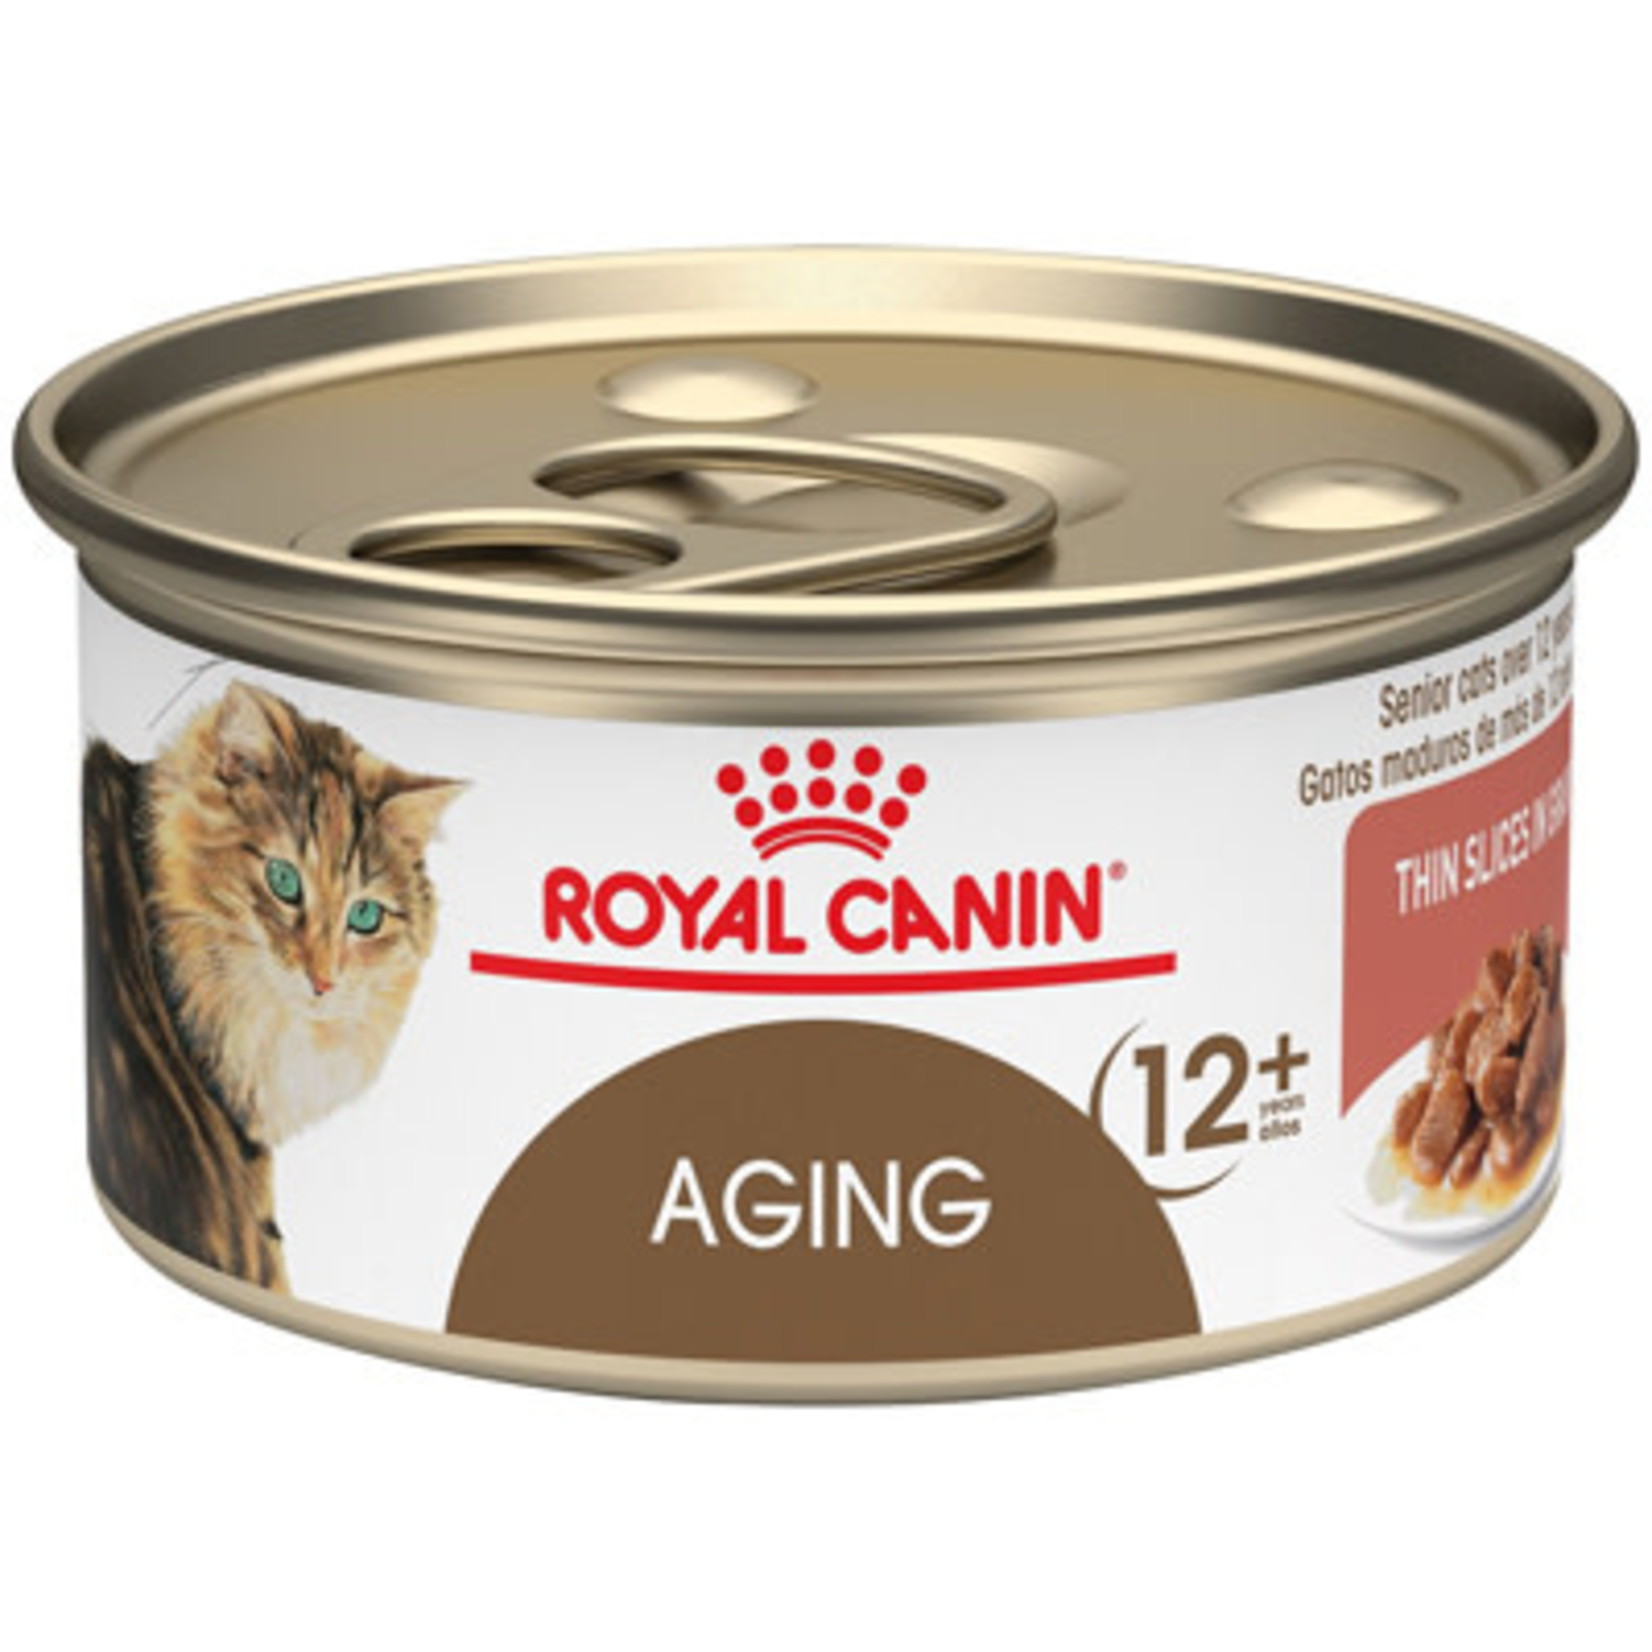 Royal Canin Aging 12+ Cat 3oz. Royal Canin